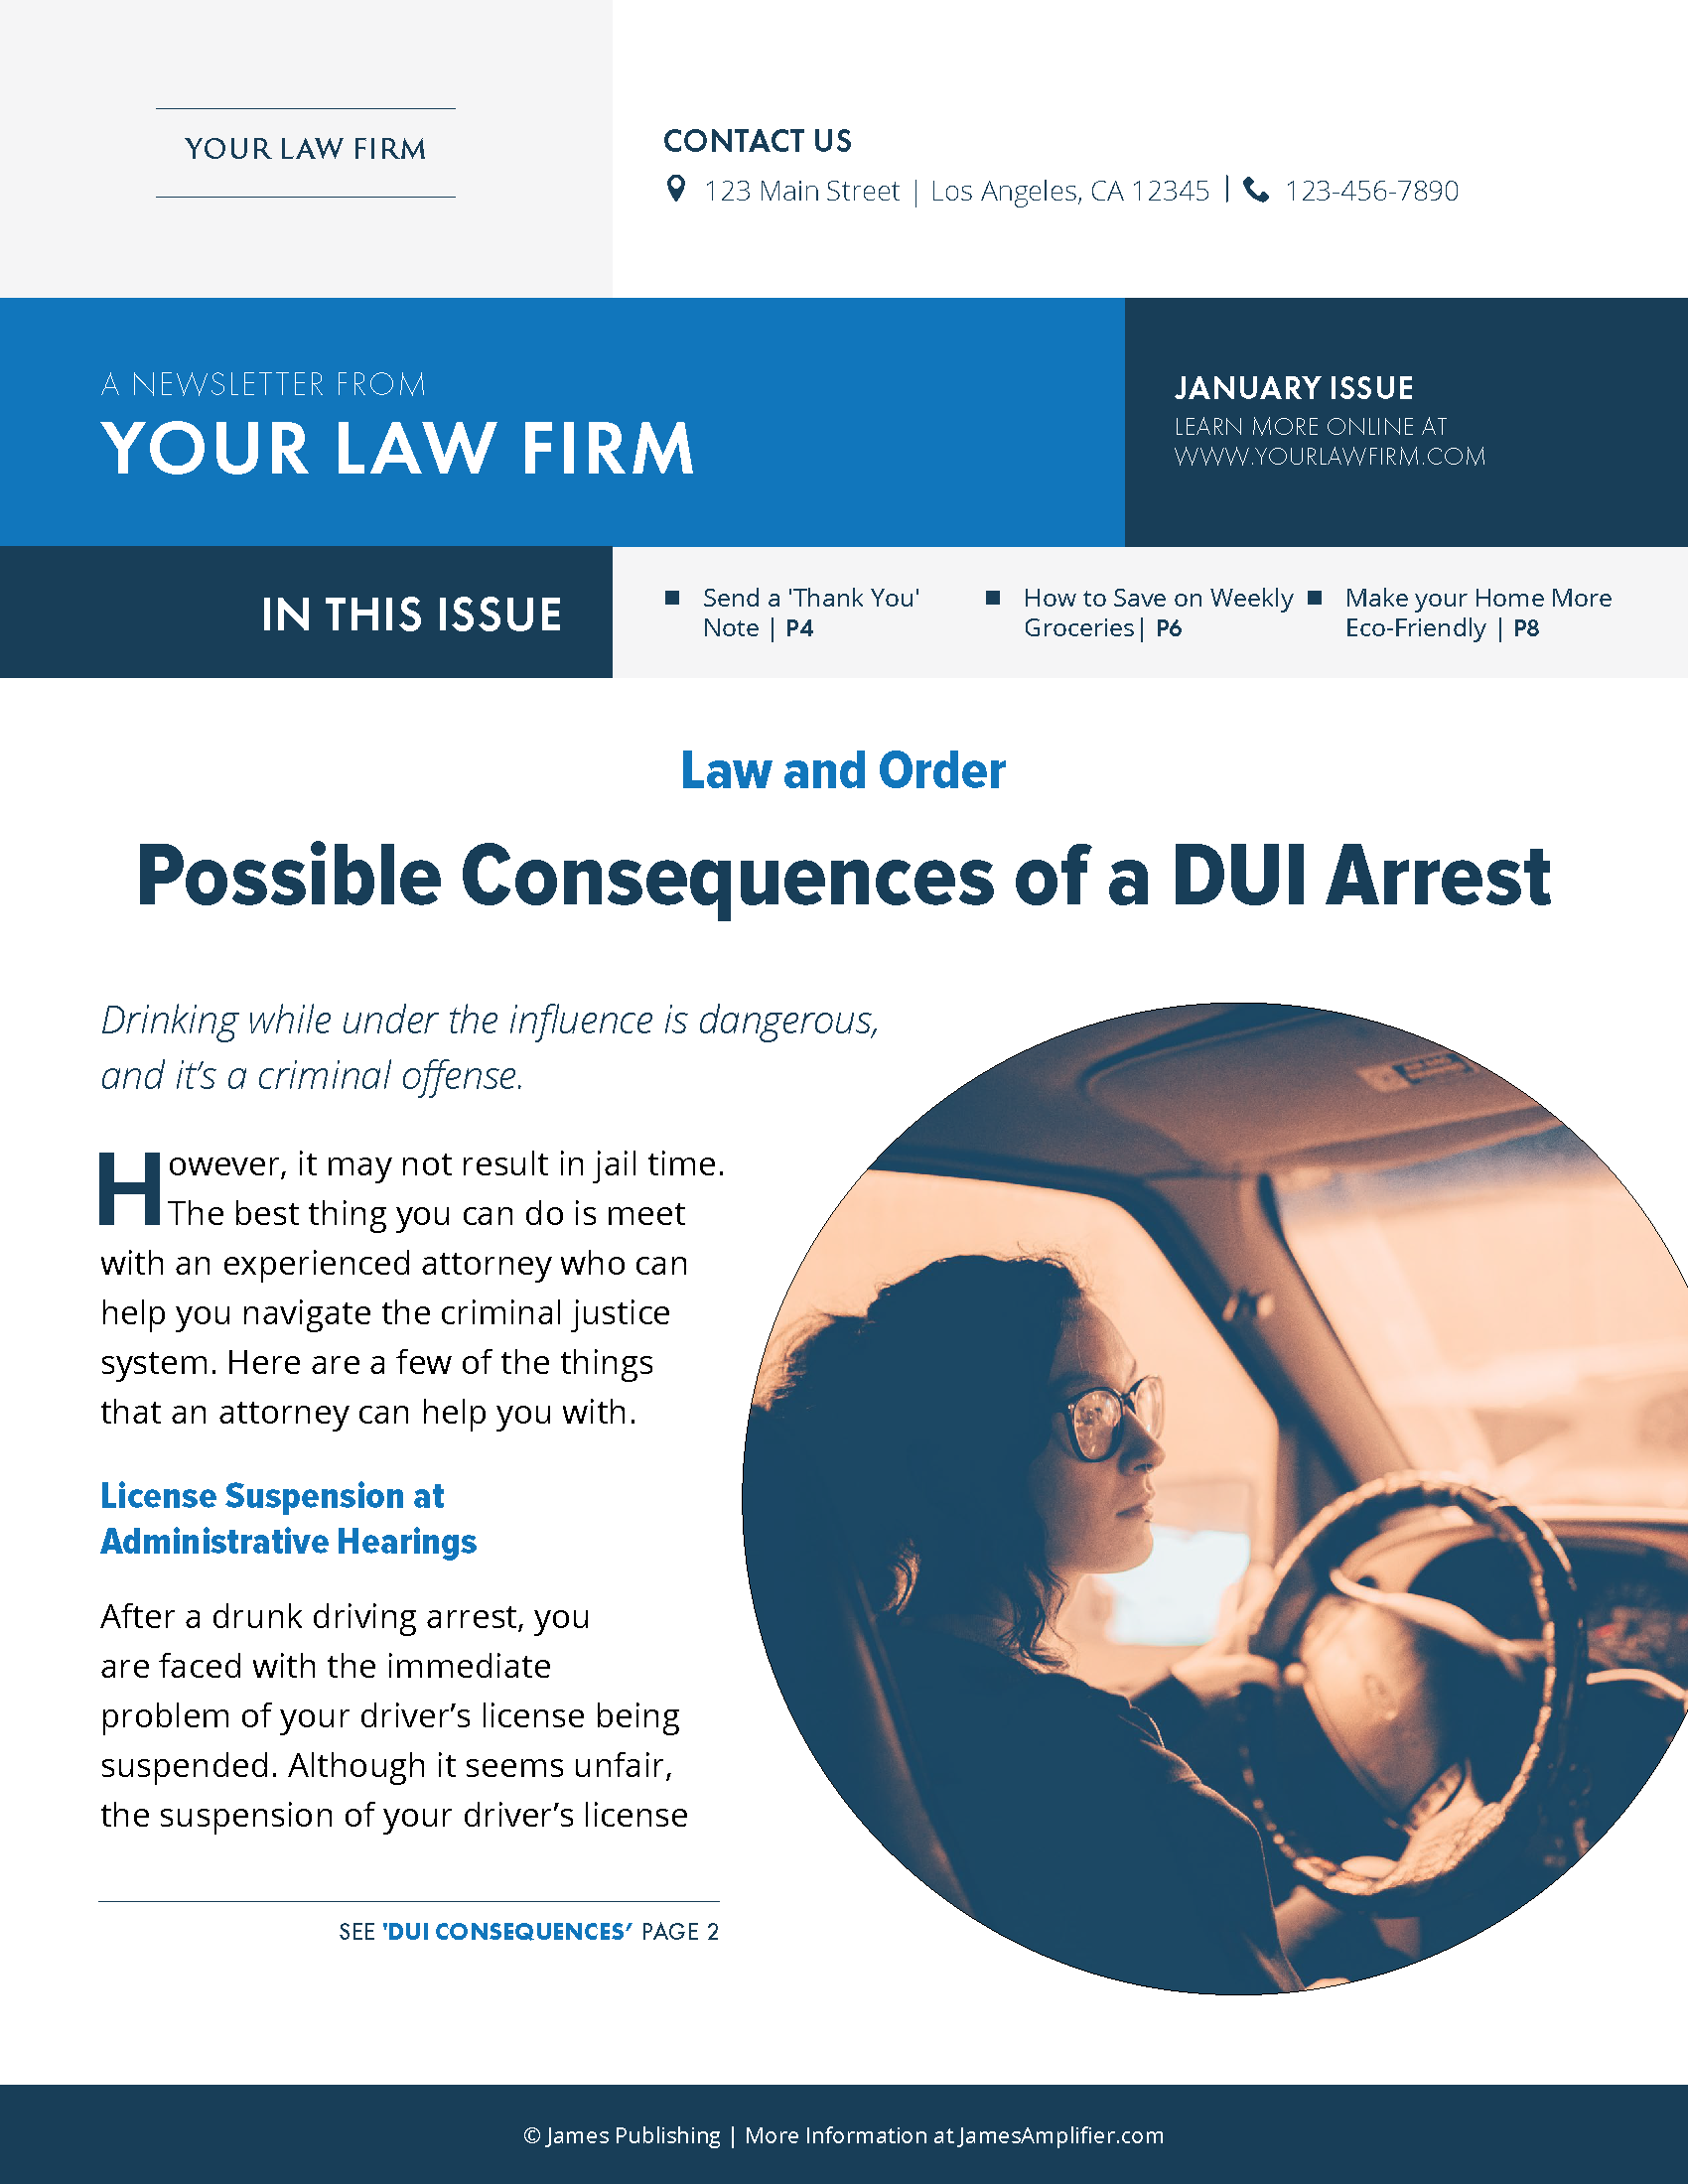 CRIM Newsletter - DUI Arrest